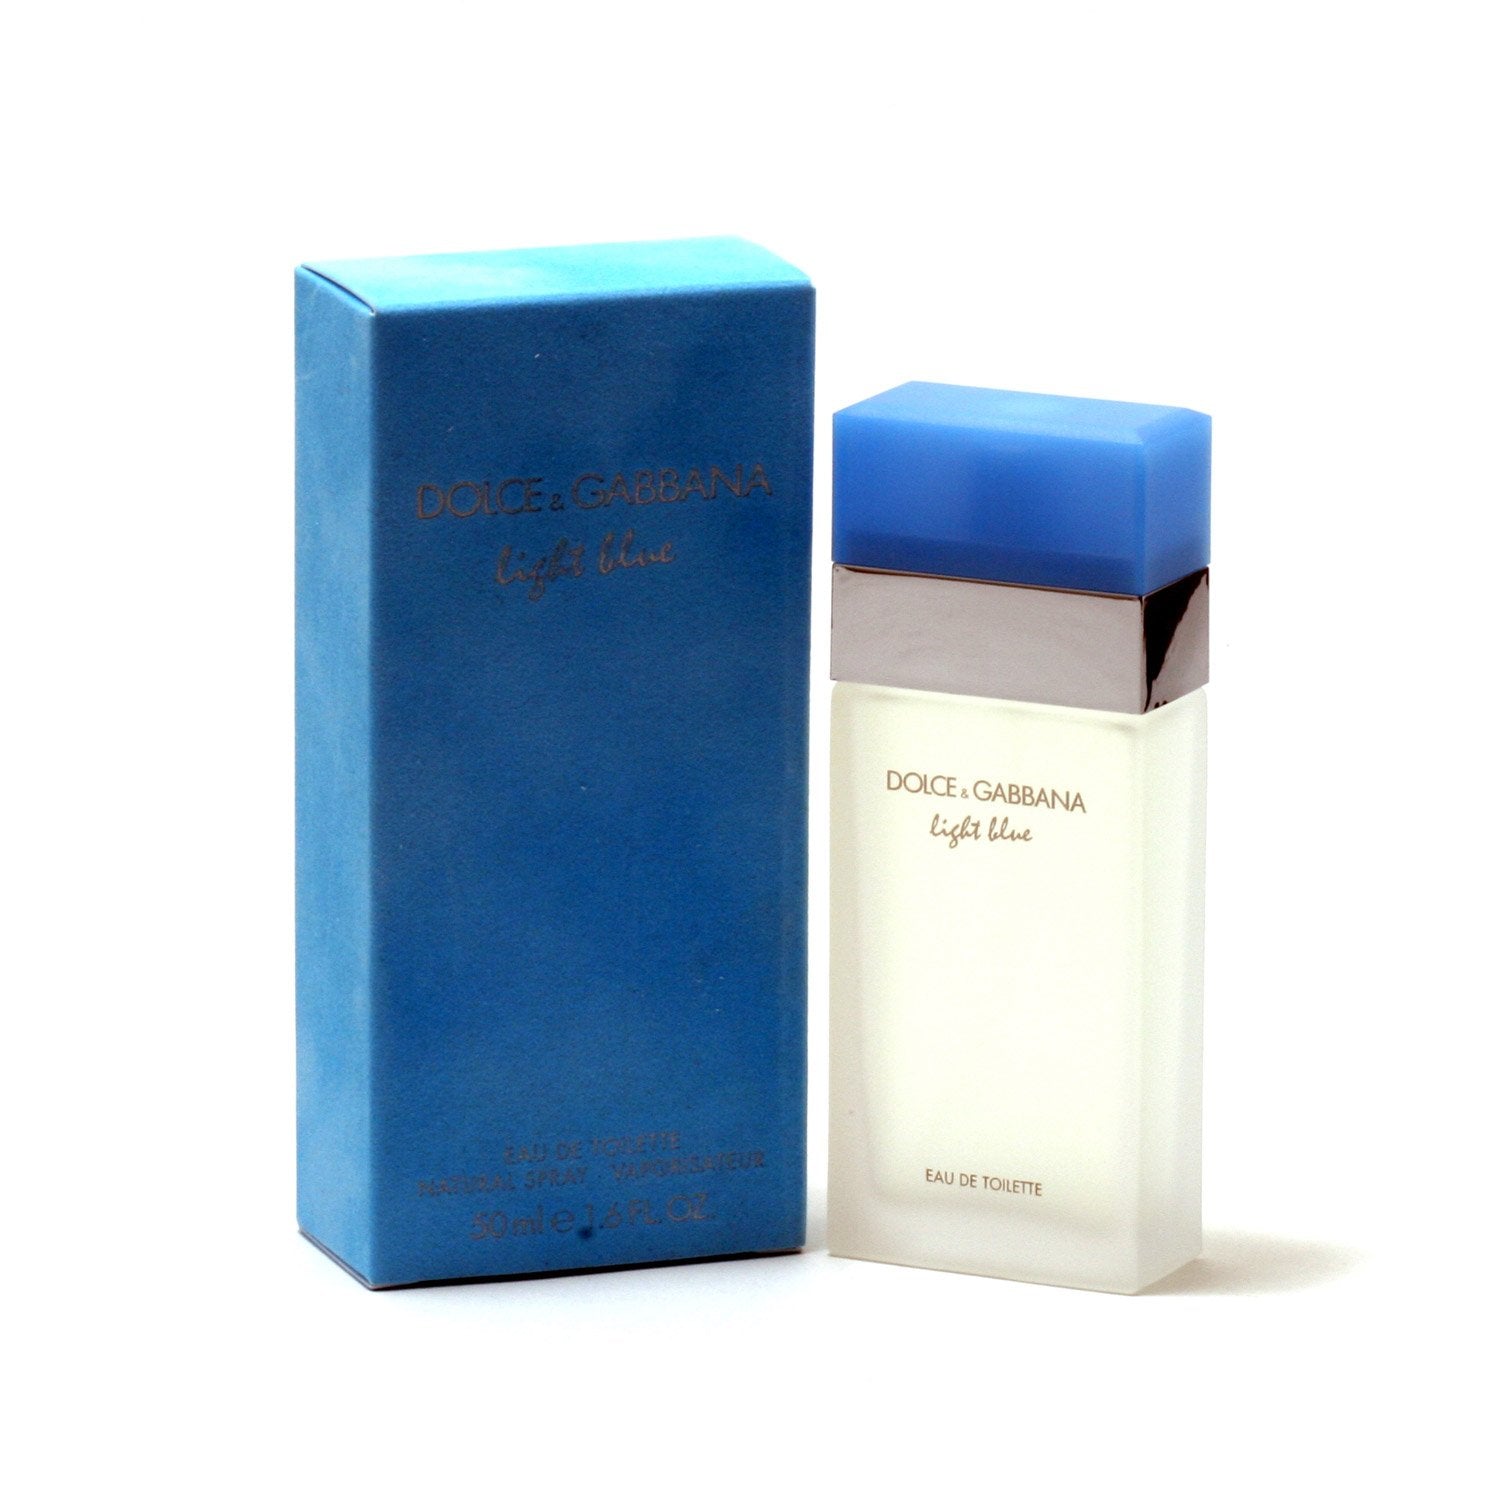 Perfume - DOLCE & GABBANA LIGHT BLUE FOR WOMEN - EAU DE TOILETTE SPRAY